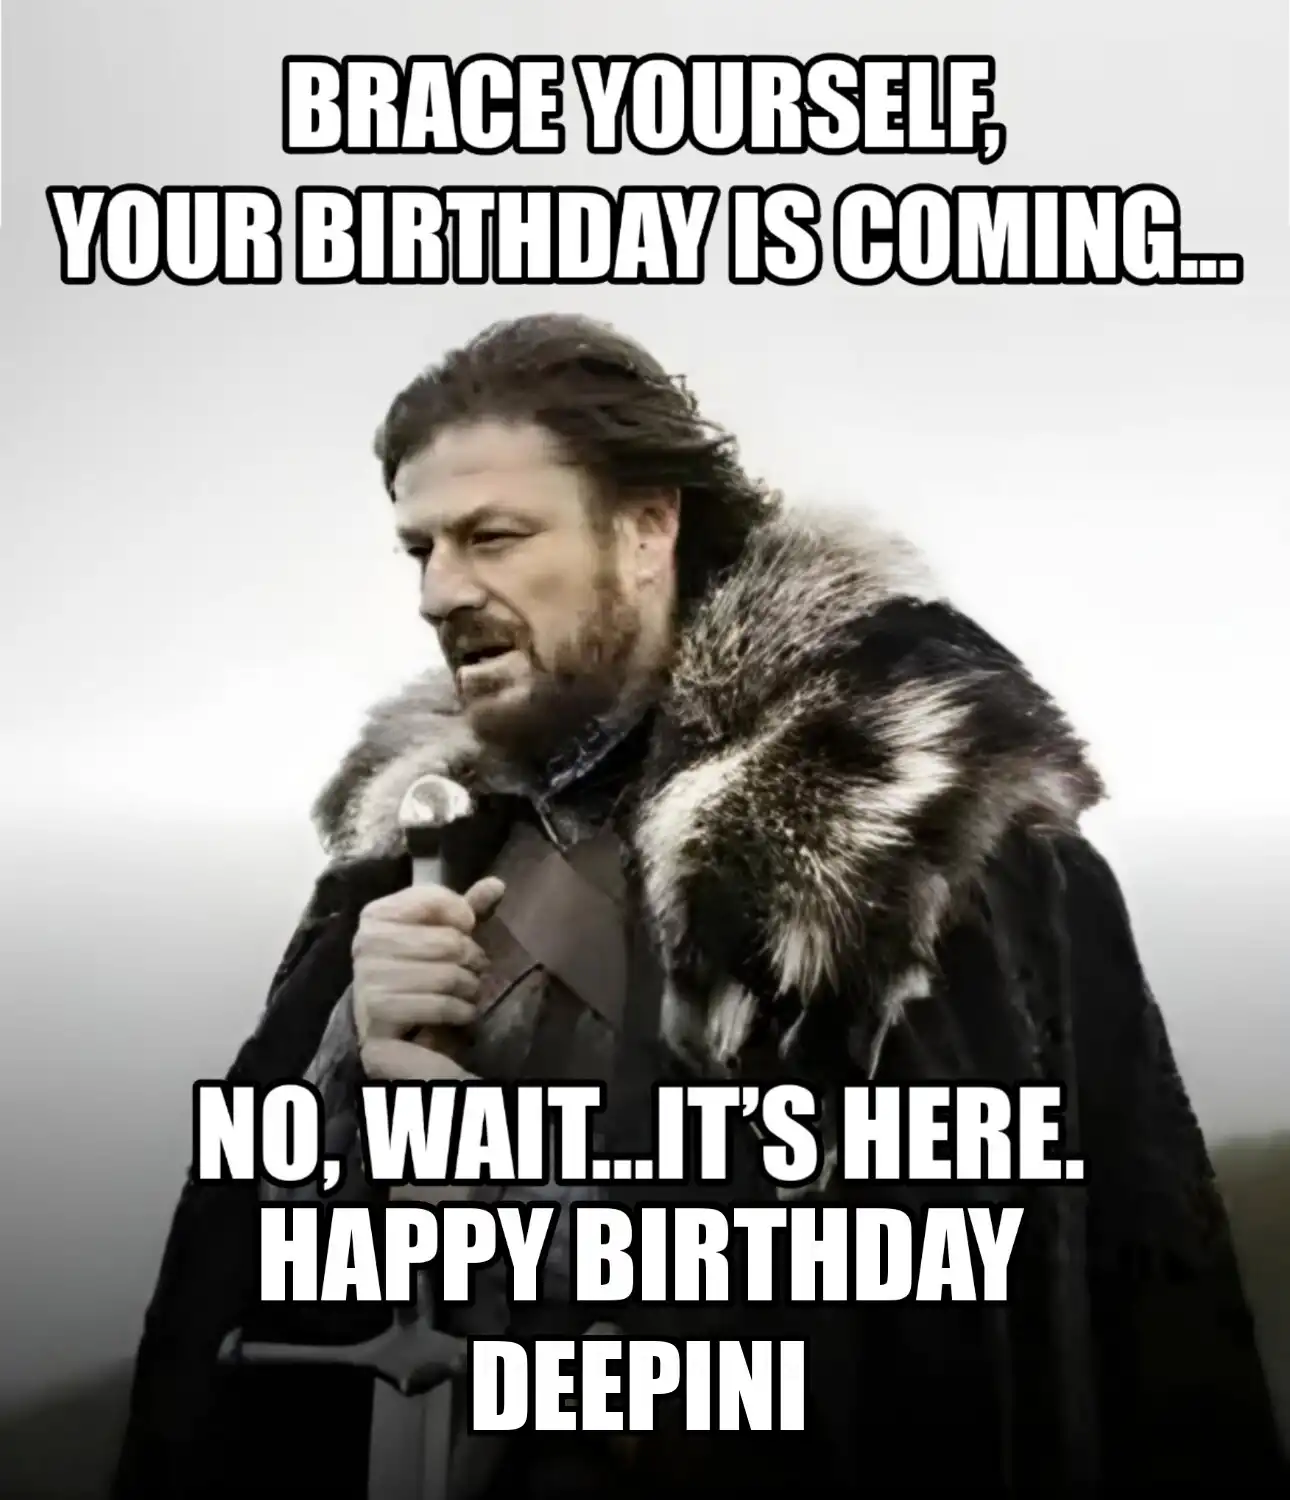 Happy Birthday Deepini Brace Yourself Your Birthday Is Coming Meme